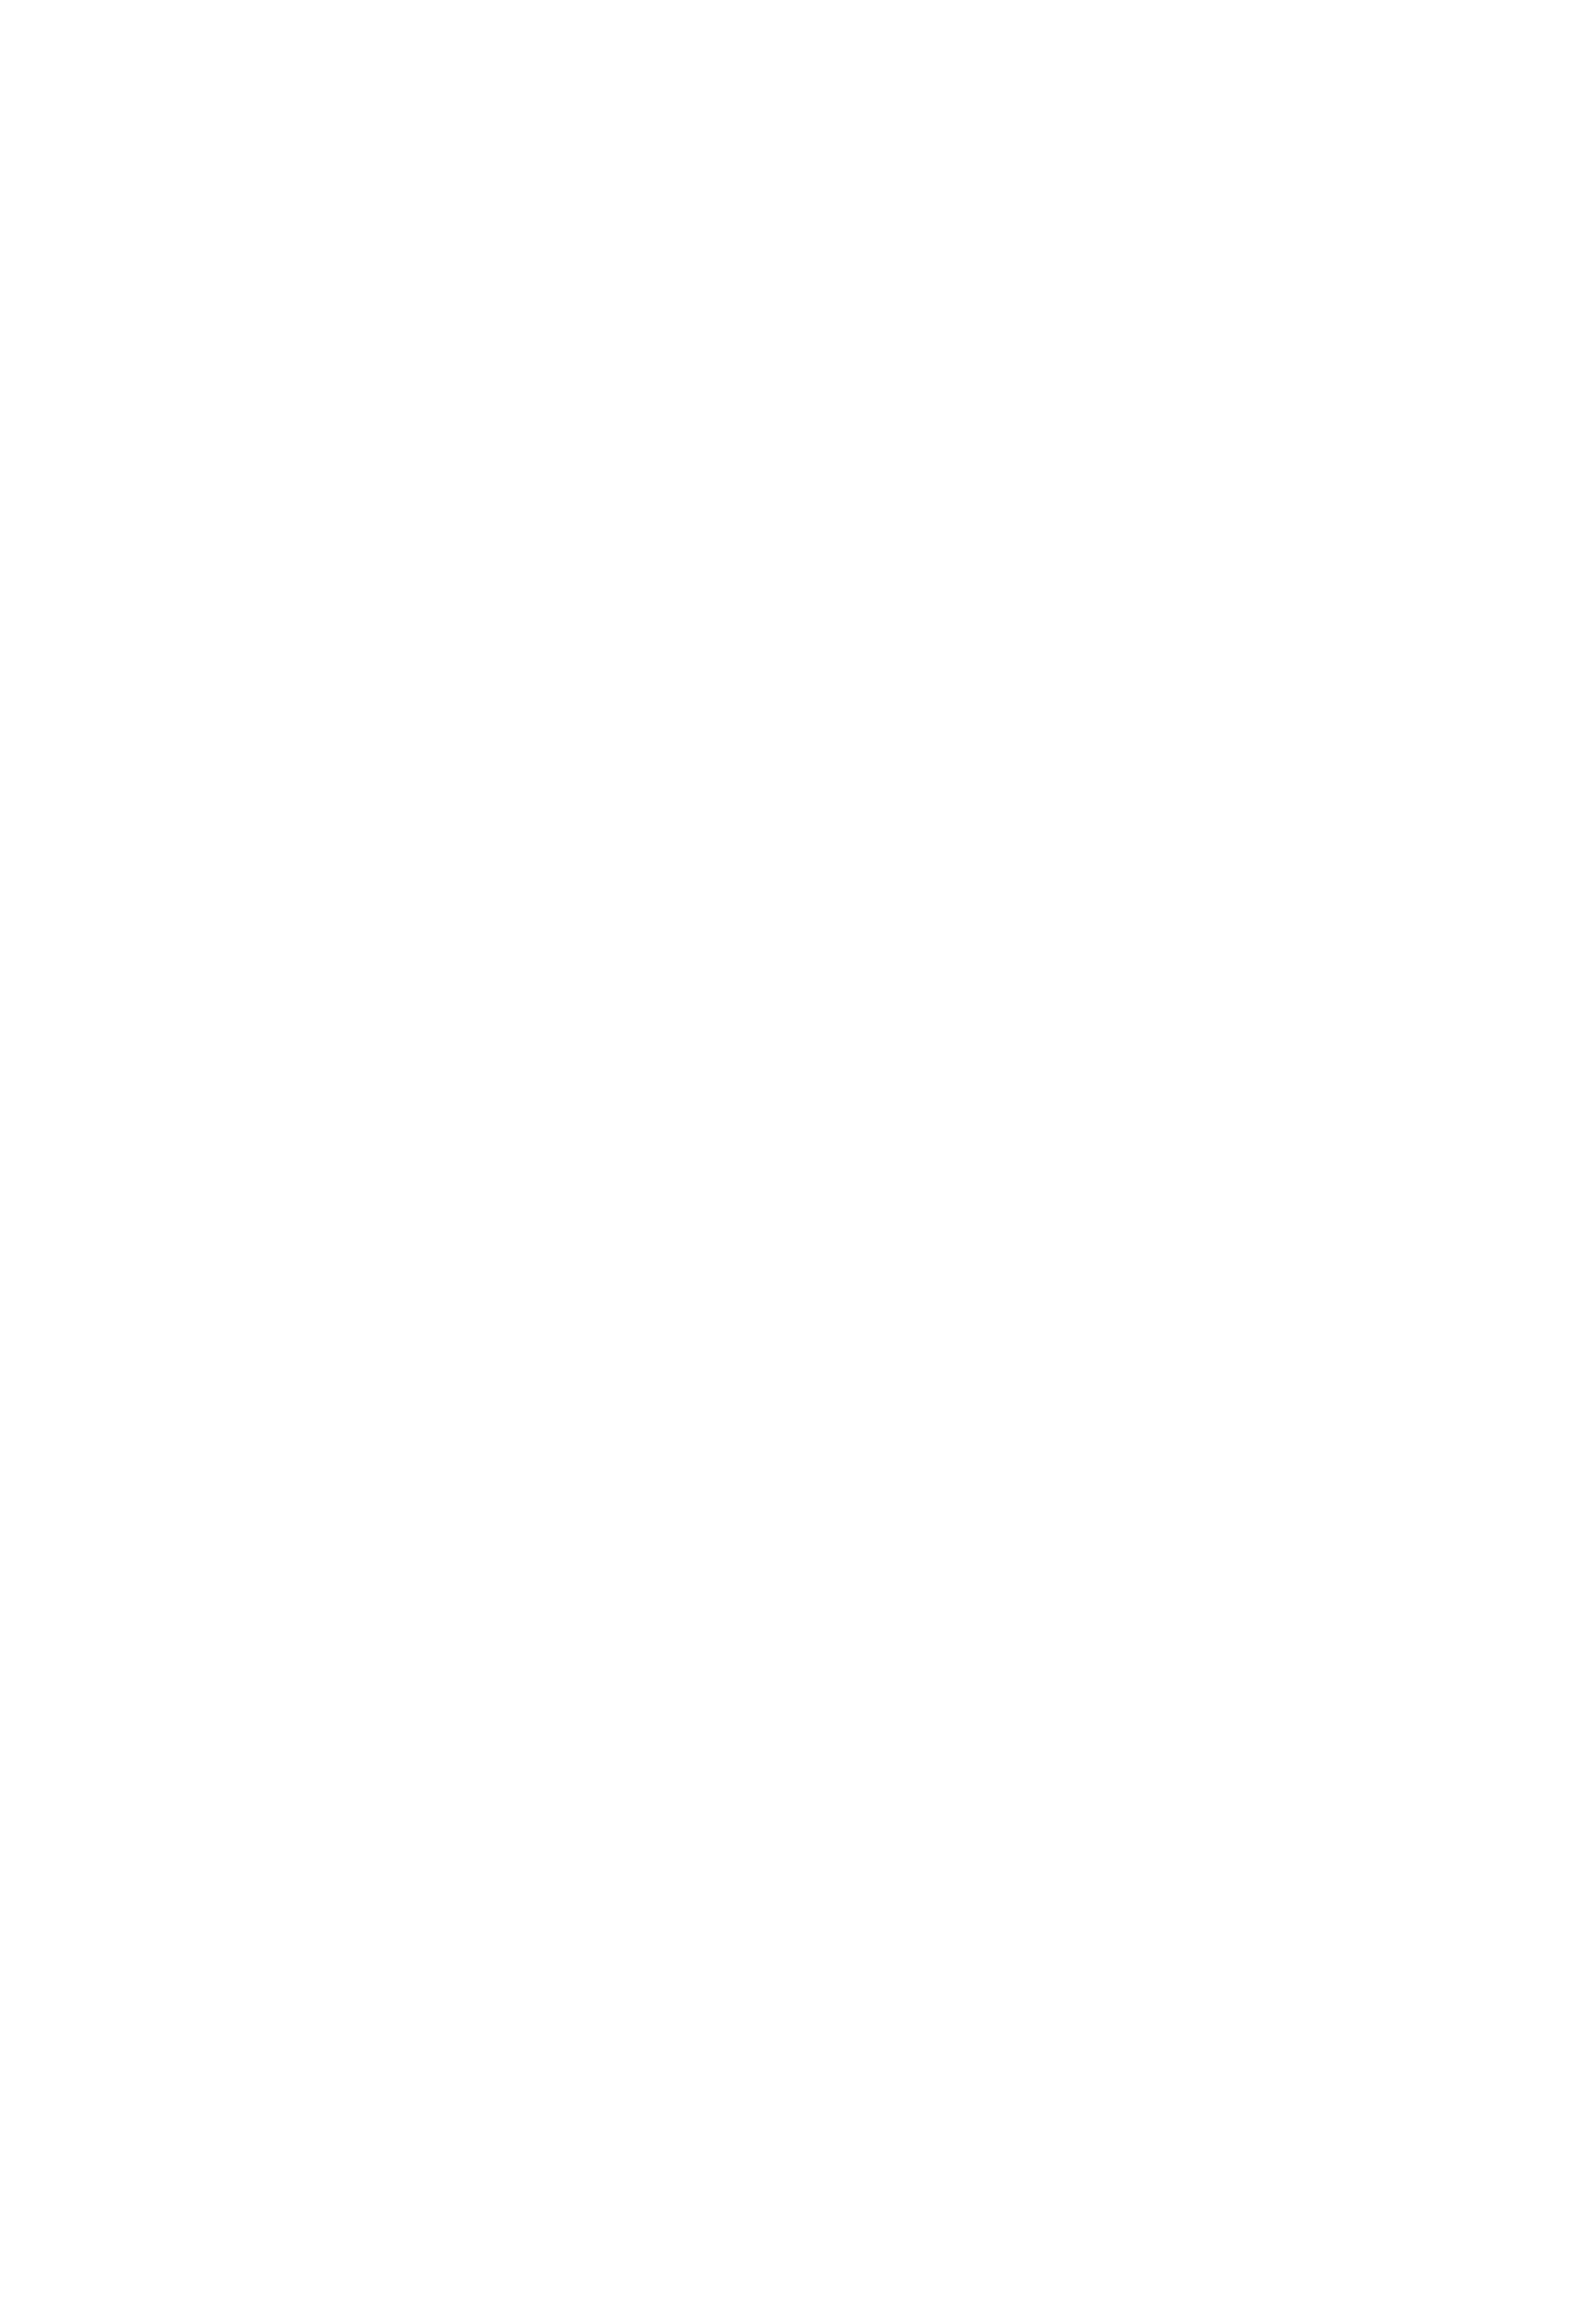 Ottawa County Health Center (9423)